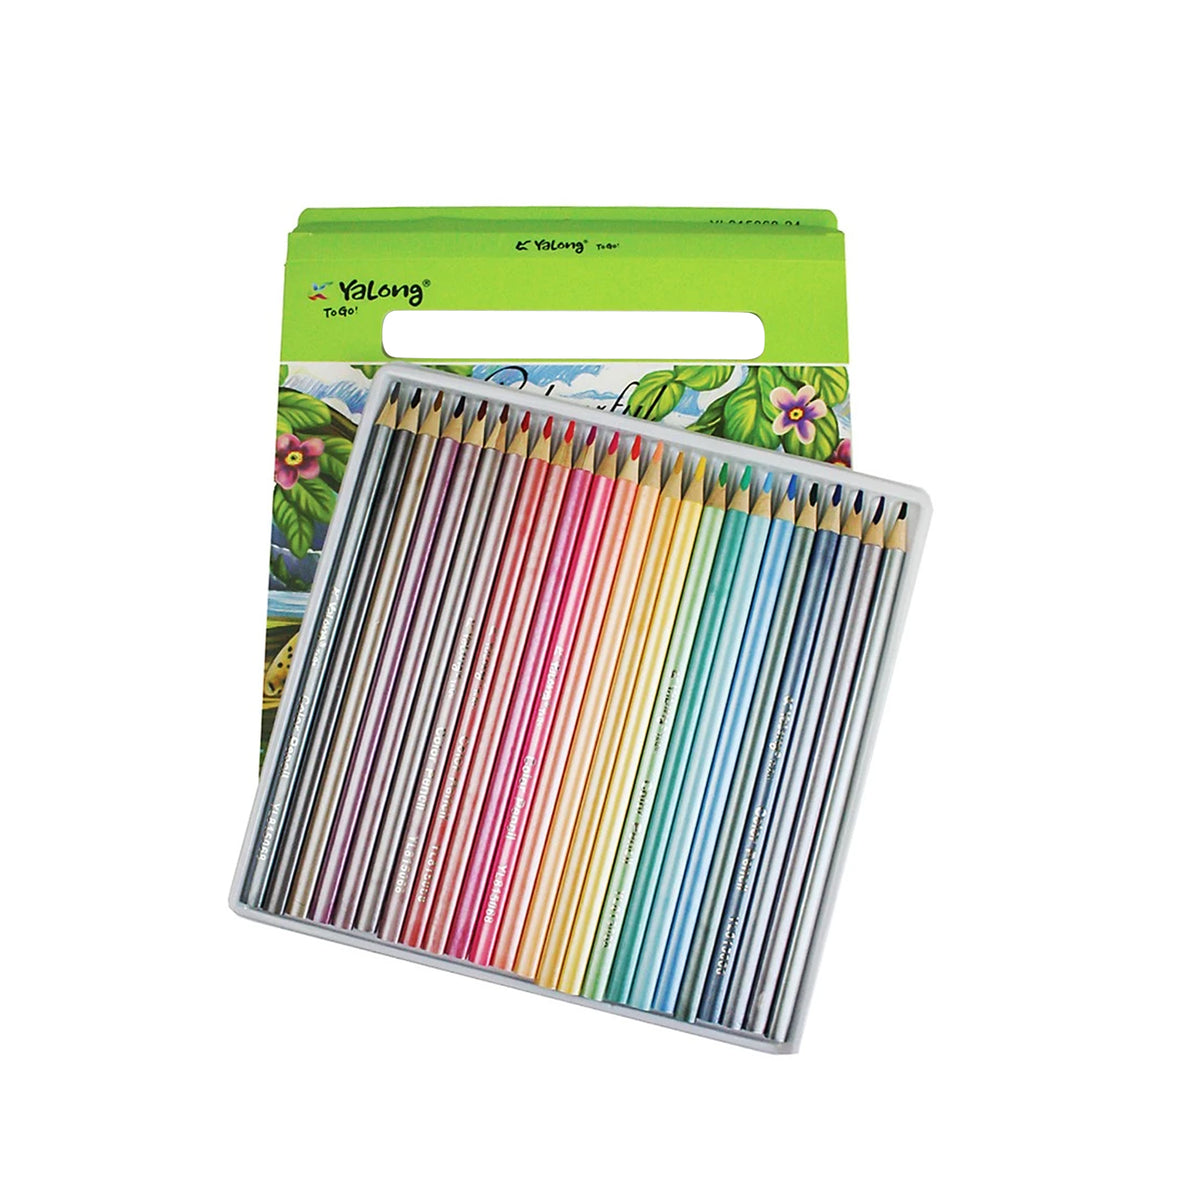 Coloring Pencils - Set of 24